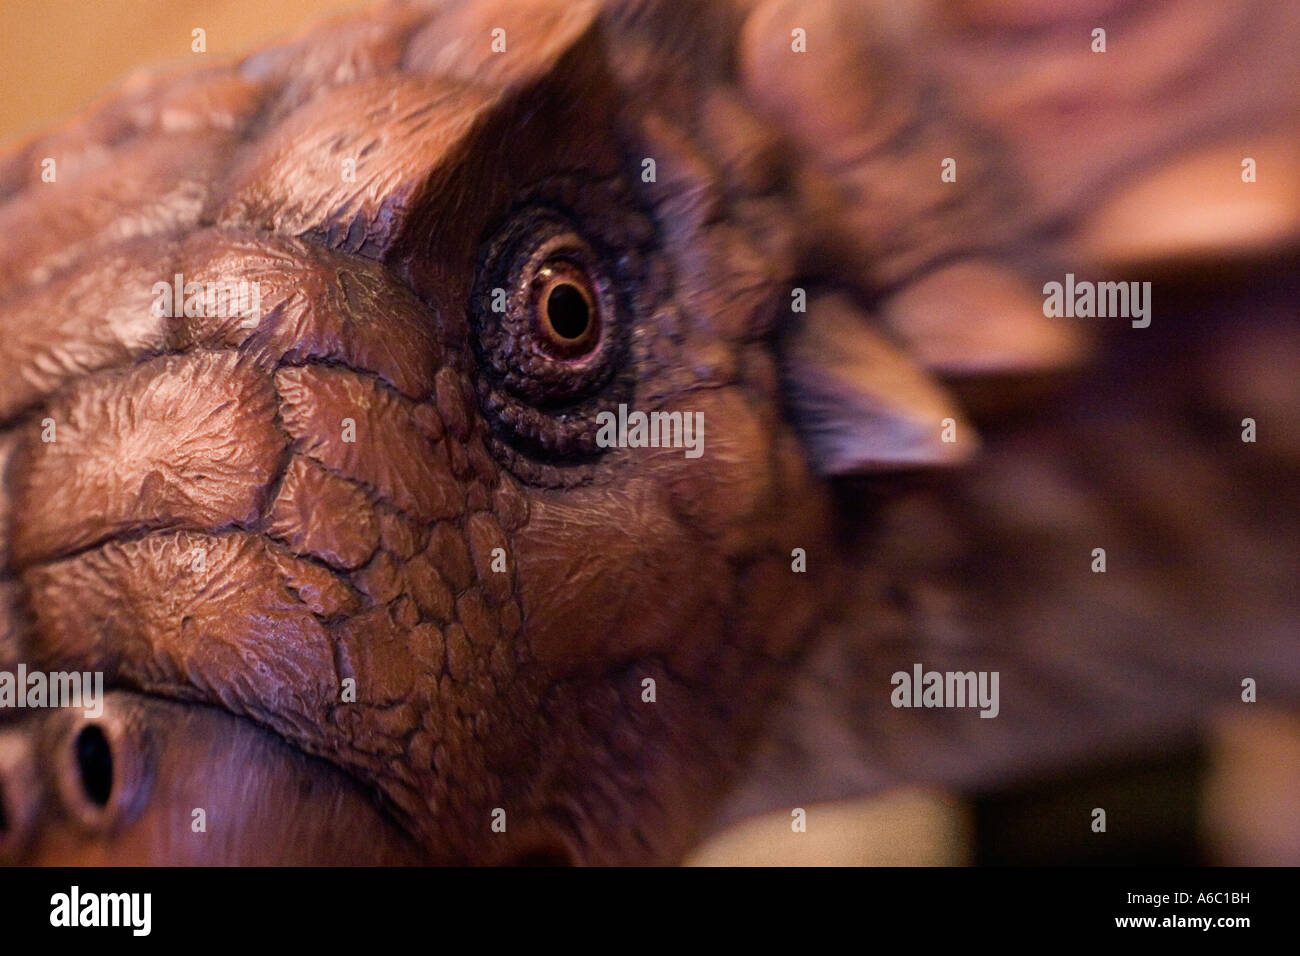 Close up stock photo of a model of the Ankylosaurus rex dinosaur. Stock Photo